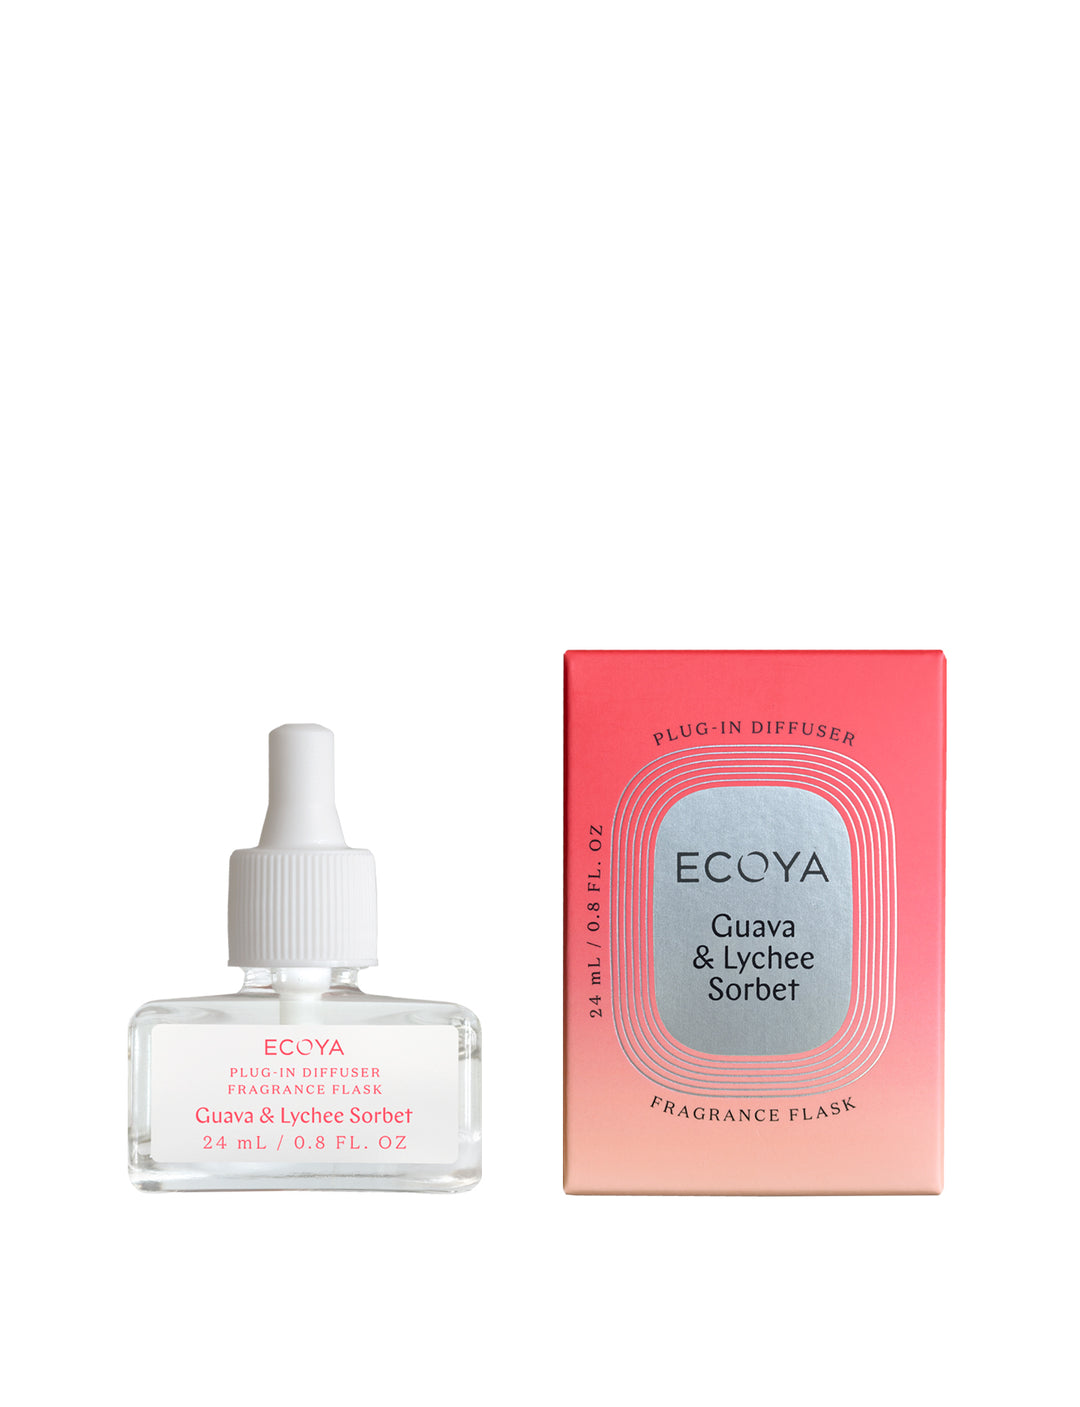 Ecoya Guava & Lychee Sorbet Plug-In Diffuser Fragrance Flask